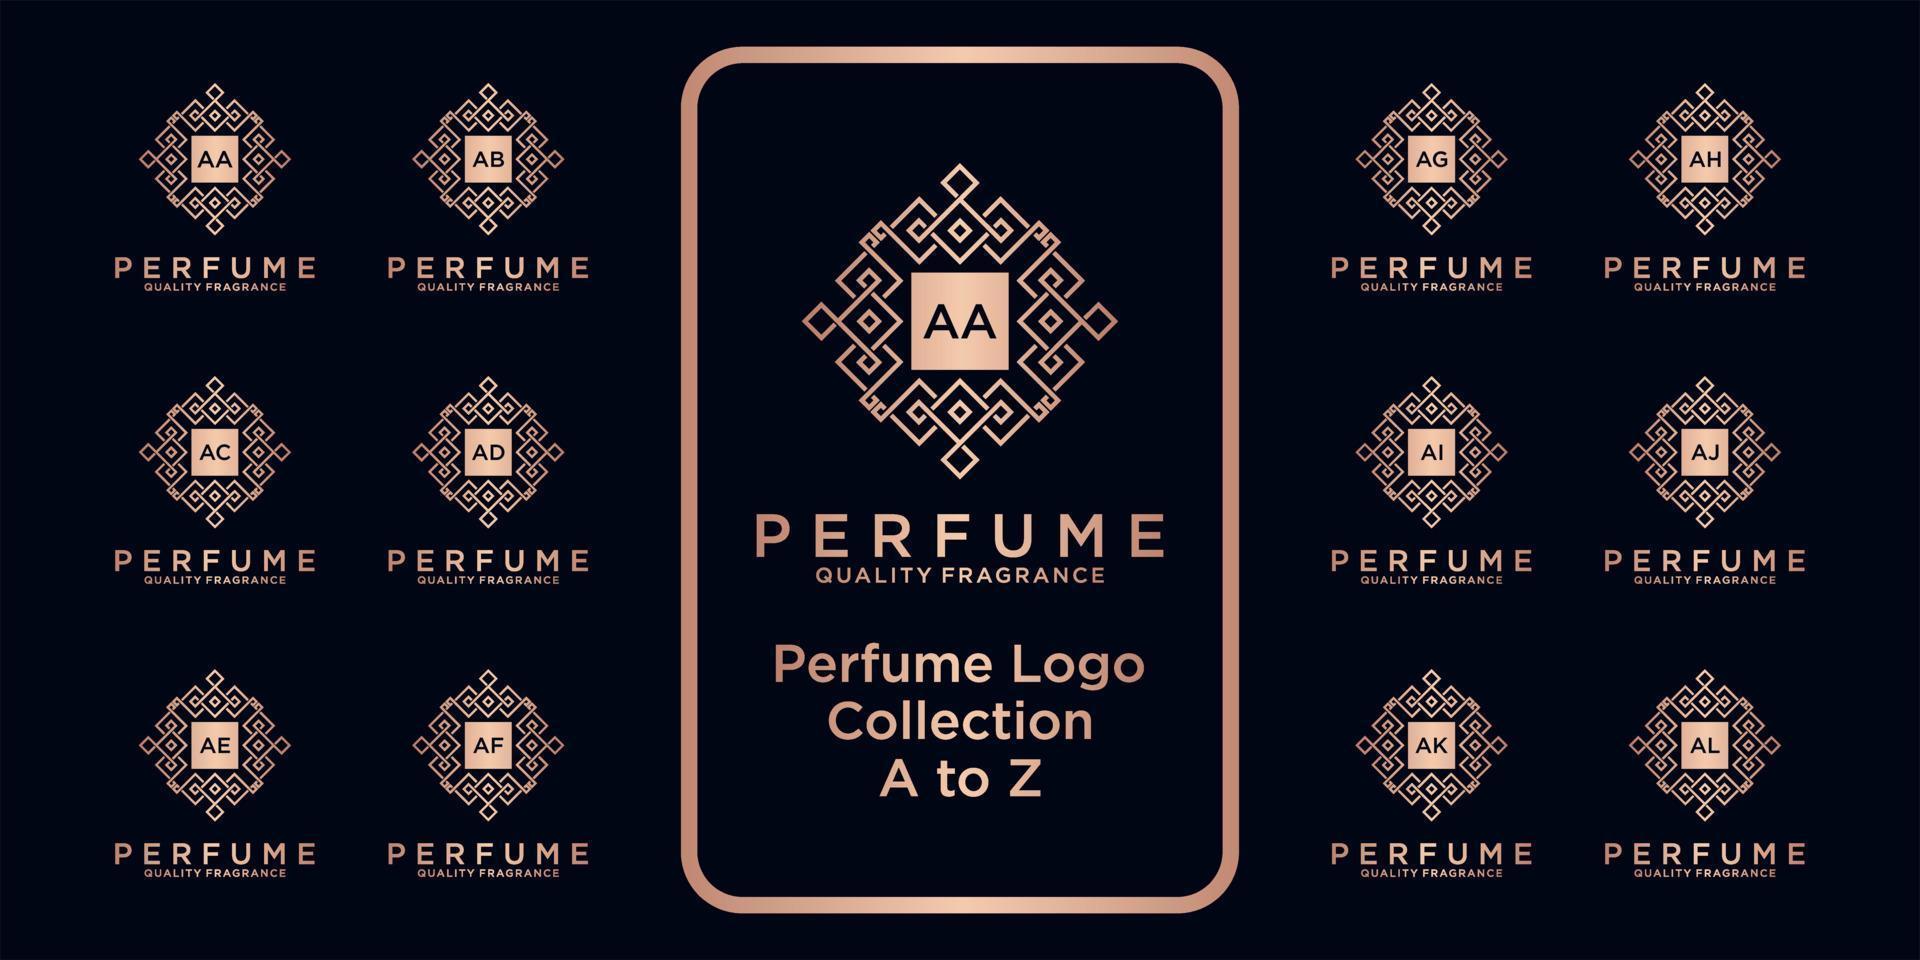 collection de logos de parfums de luxe avec concept initial. vecteur